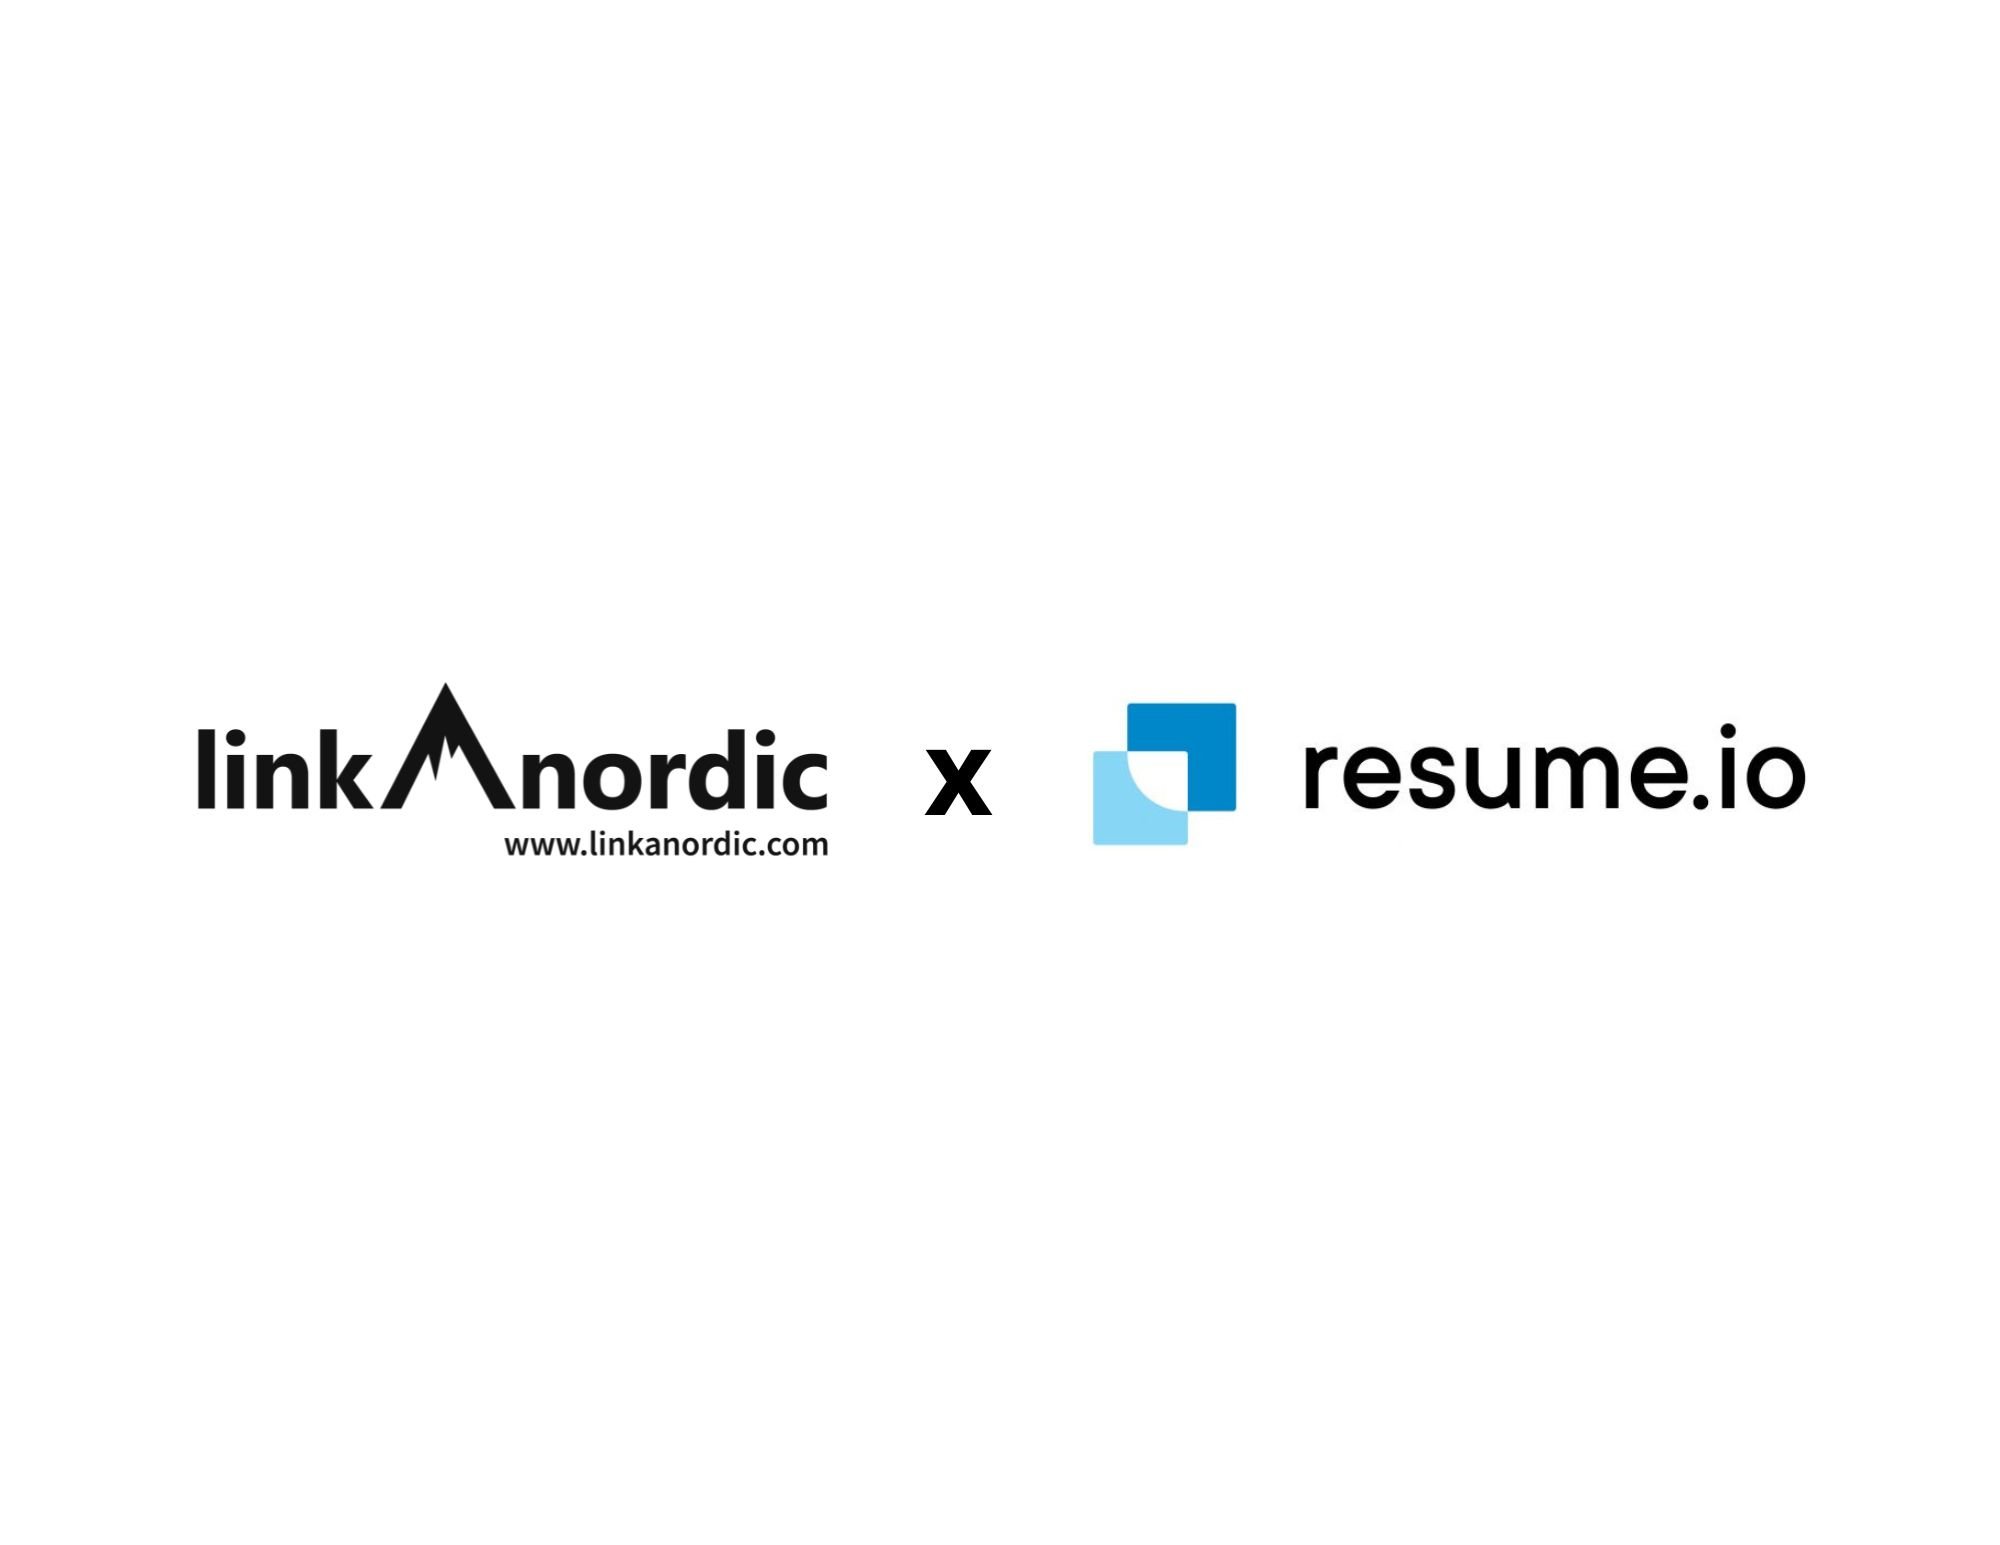 linkAnordic x samarbejde med resume.io